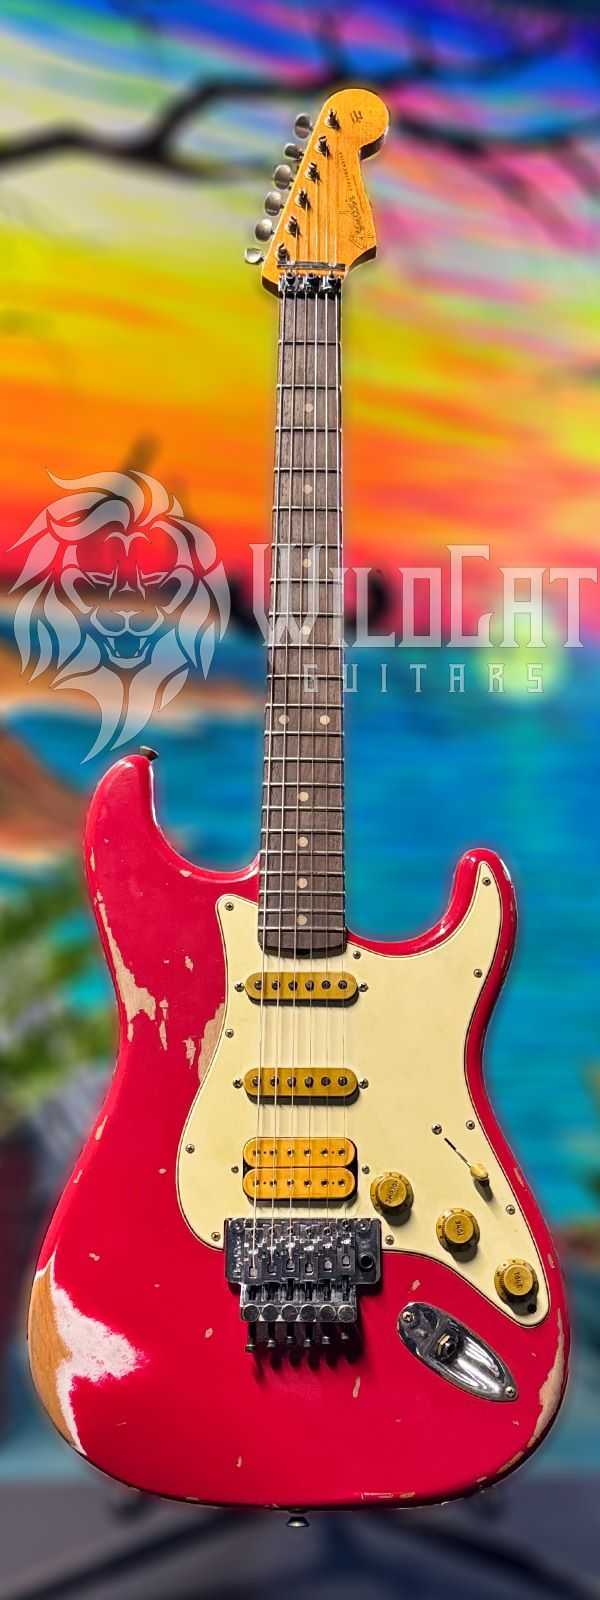 WildCat Exclusive Fender Custom Shop Alley Cat Strat “Modern” Torino Red R121445